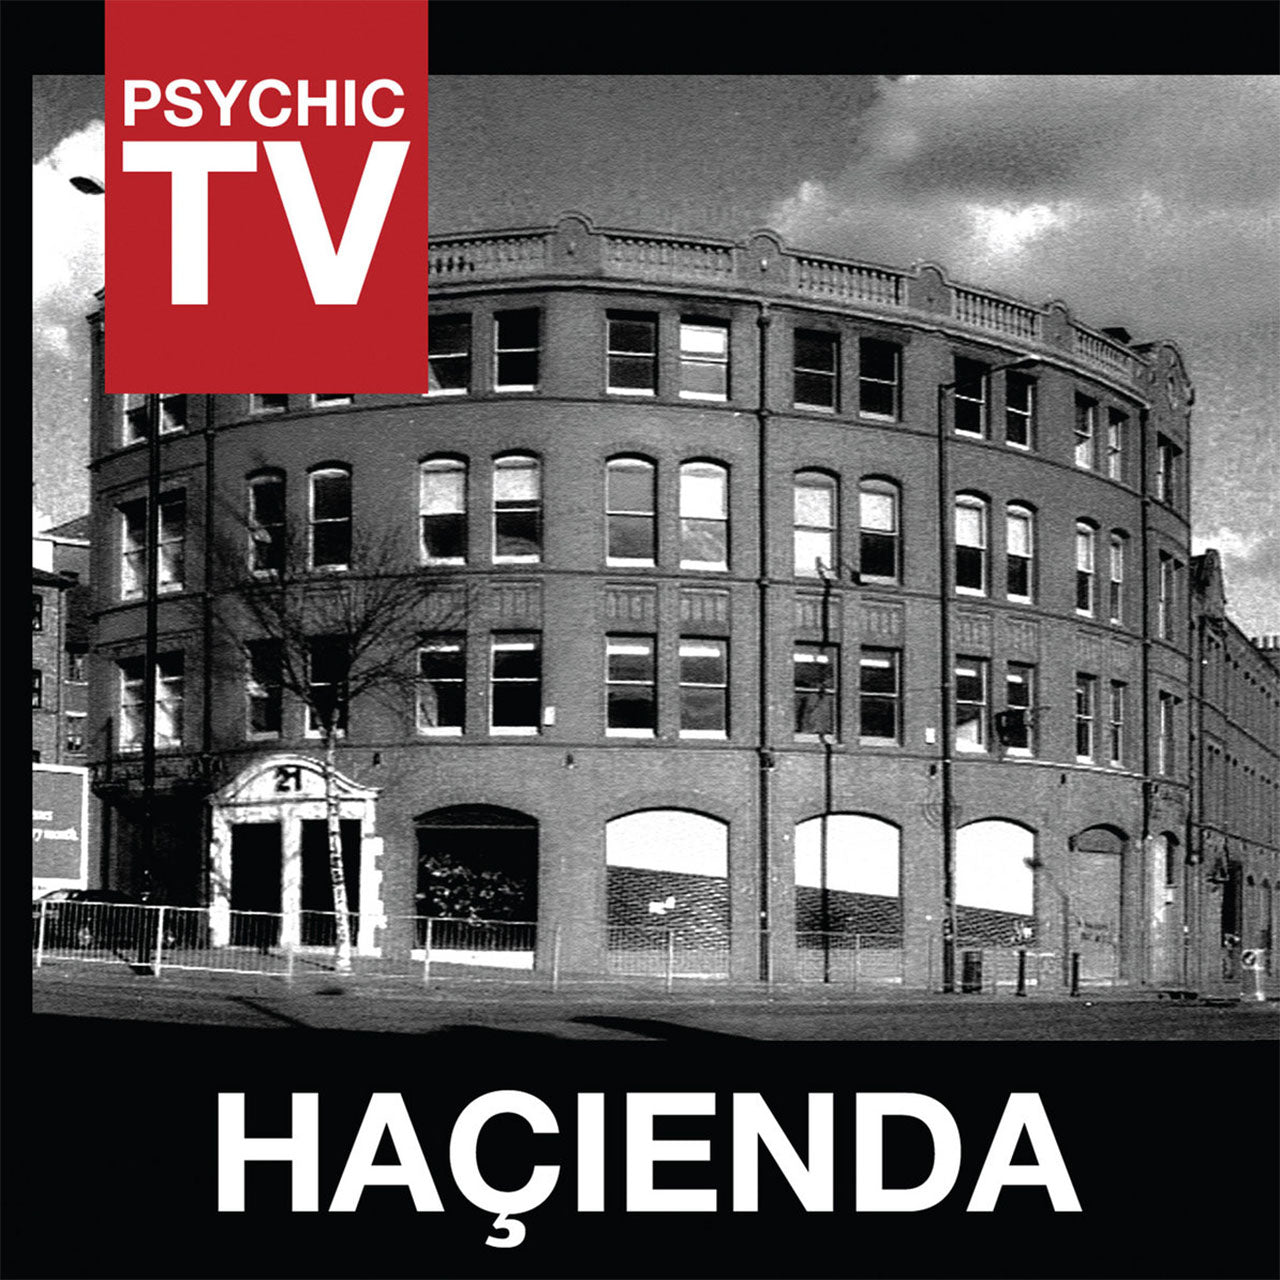 Psychic TV - Hacienda (2013 Reissue) (CD)